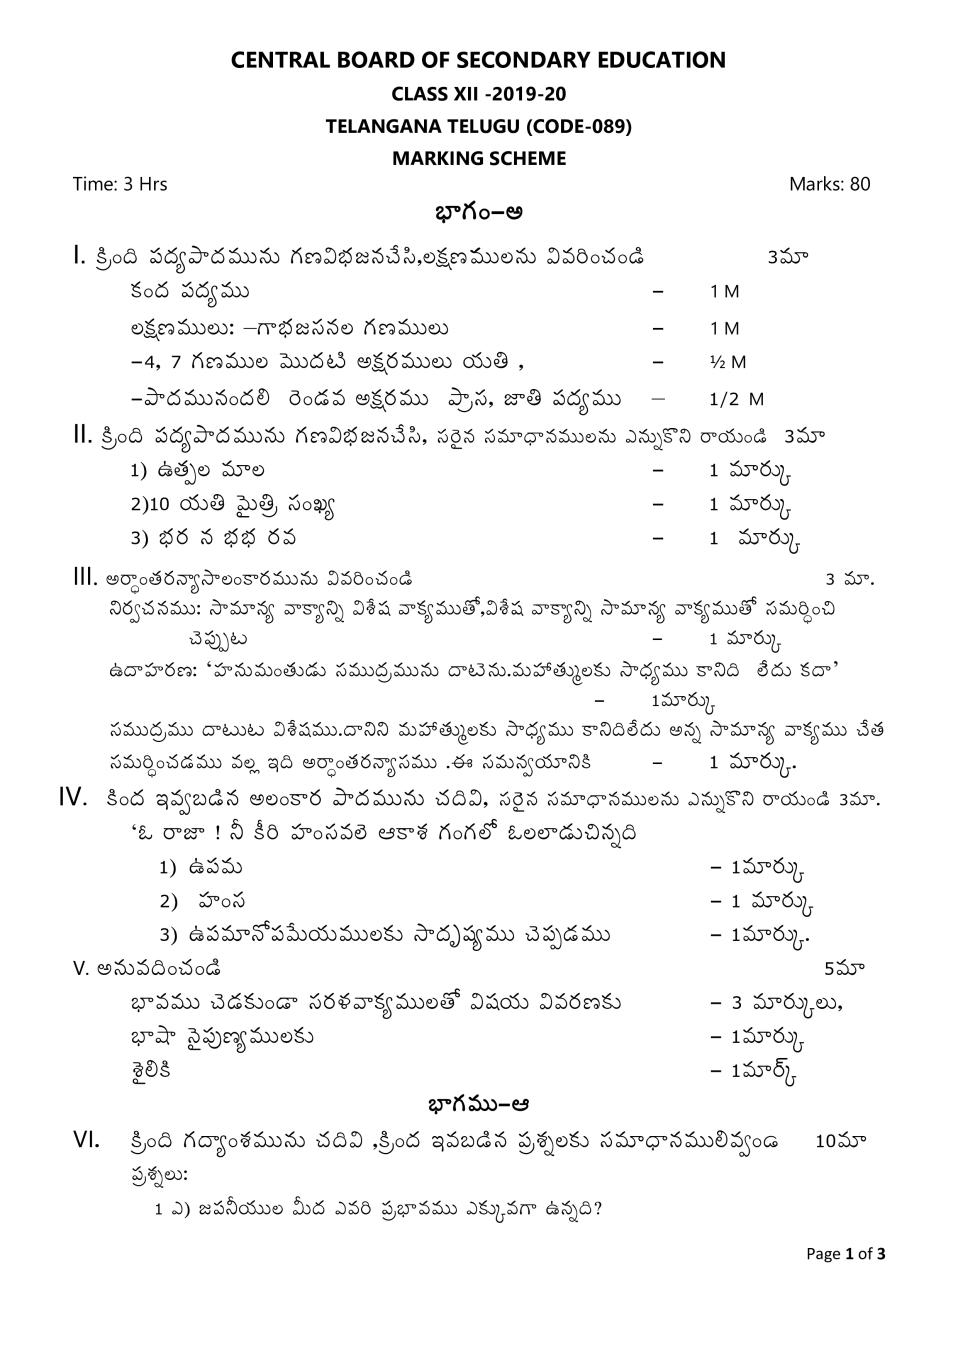 CBSE Class 12 Marking Scheme 2020 for Telugu Telangana - Page 1